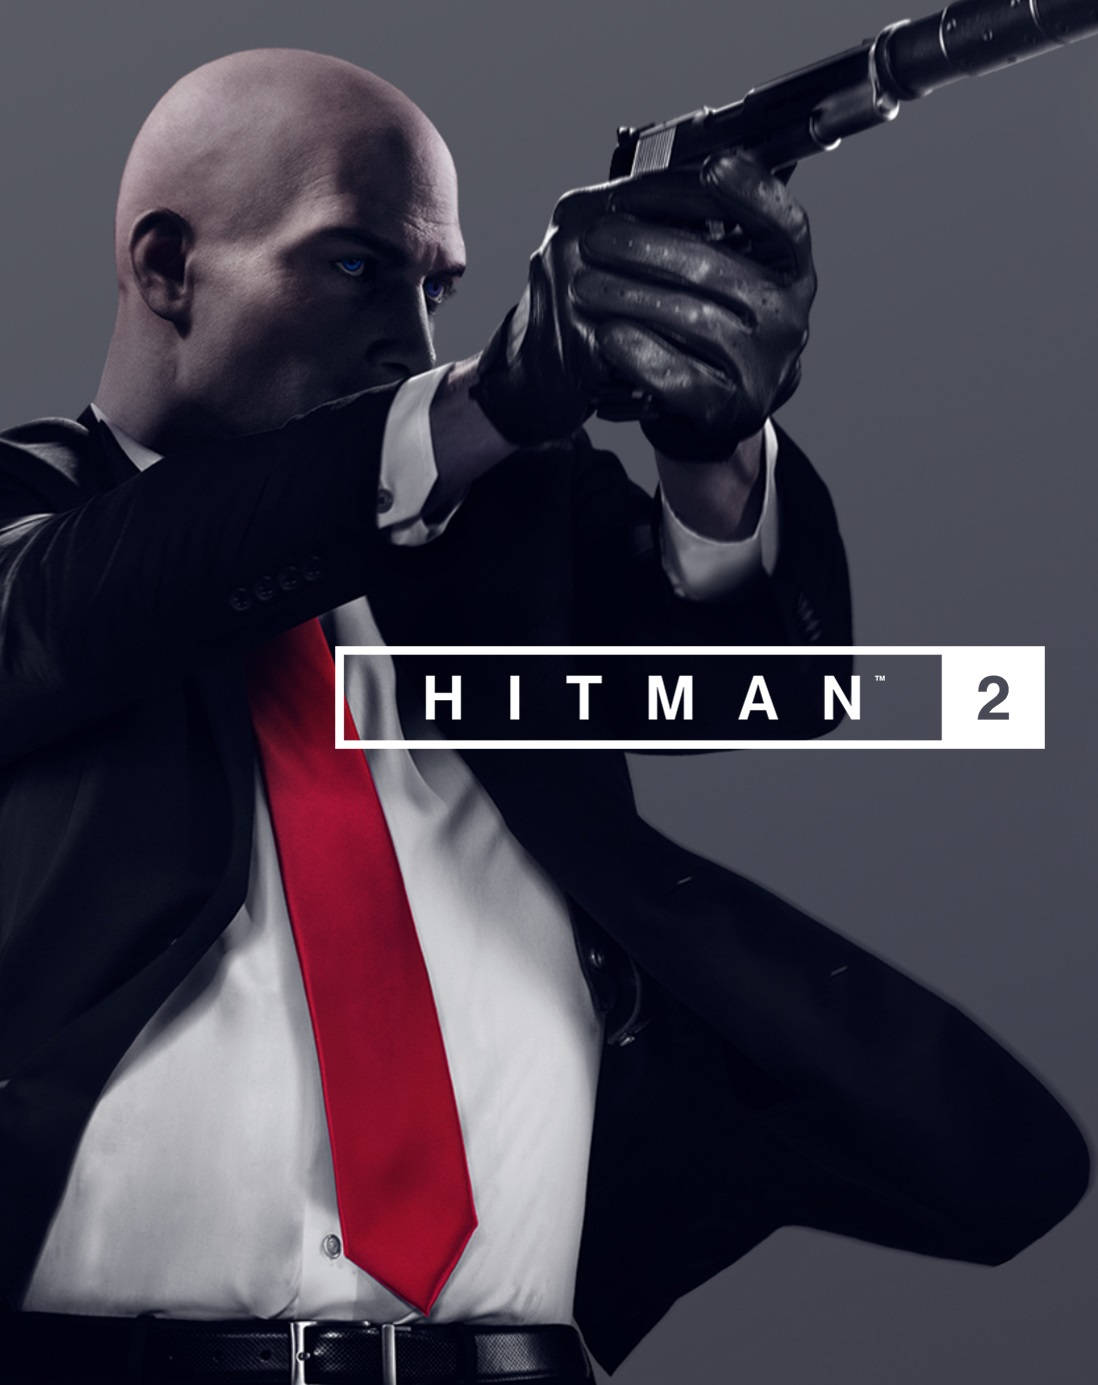 Hitman 2018 Agent 47 With Pistol Wallpaper